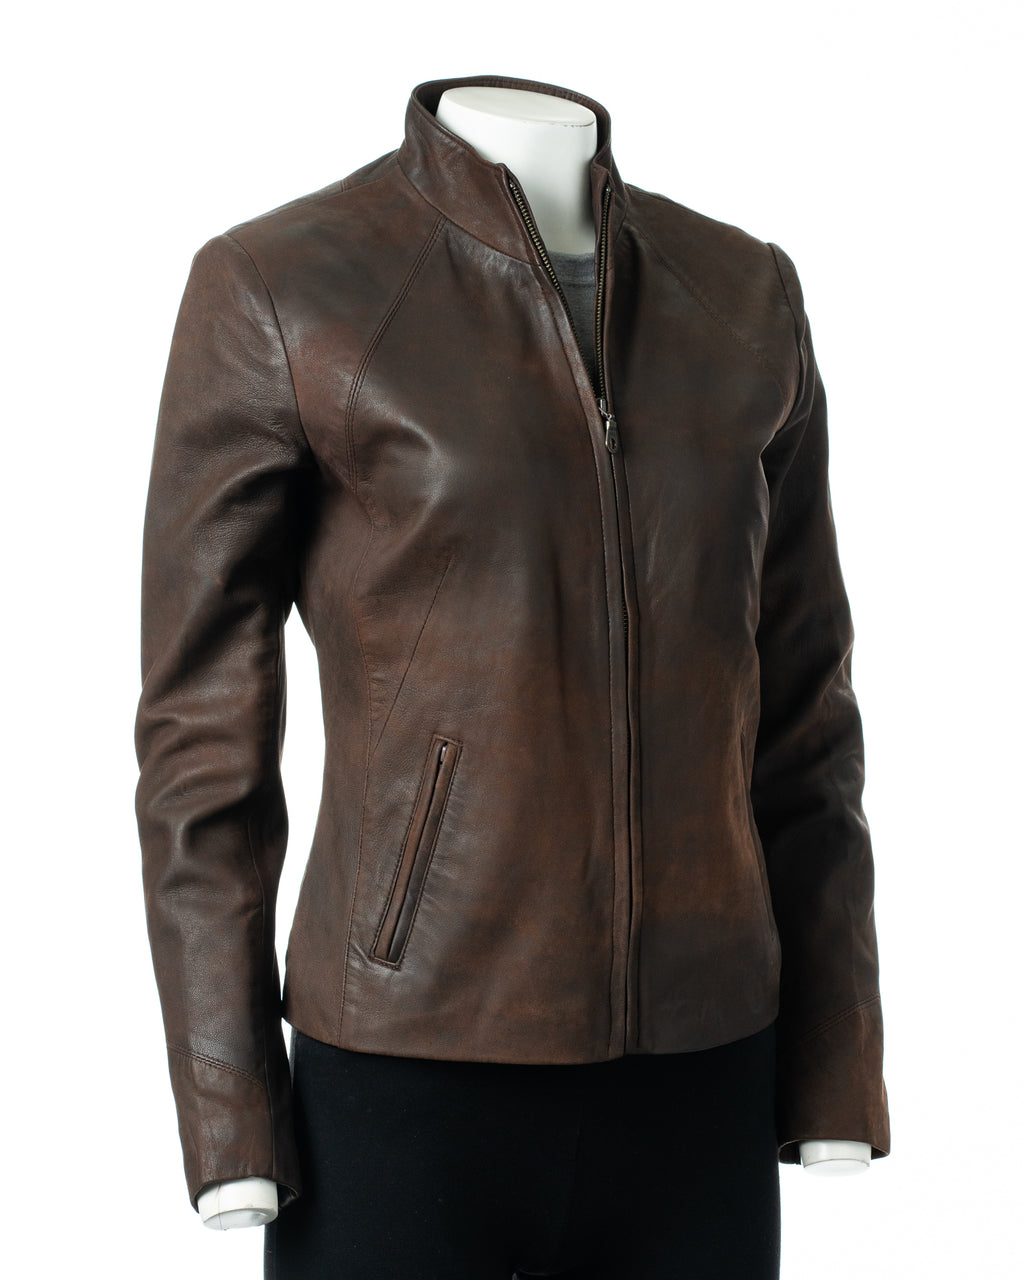 Ladies Buff Brown Plain Short Zipped Leather Jacket: Angelina